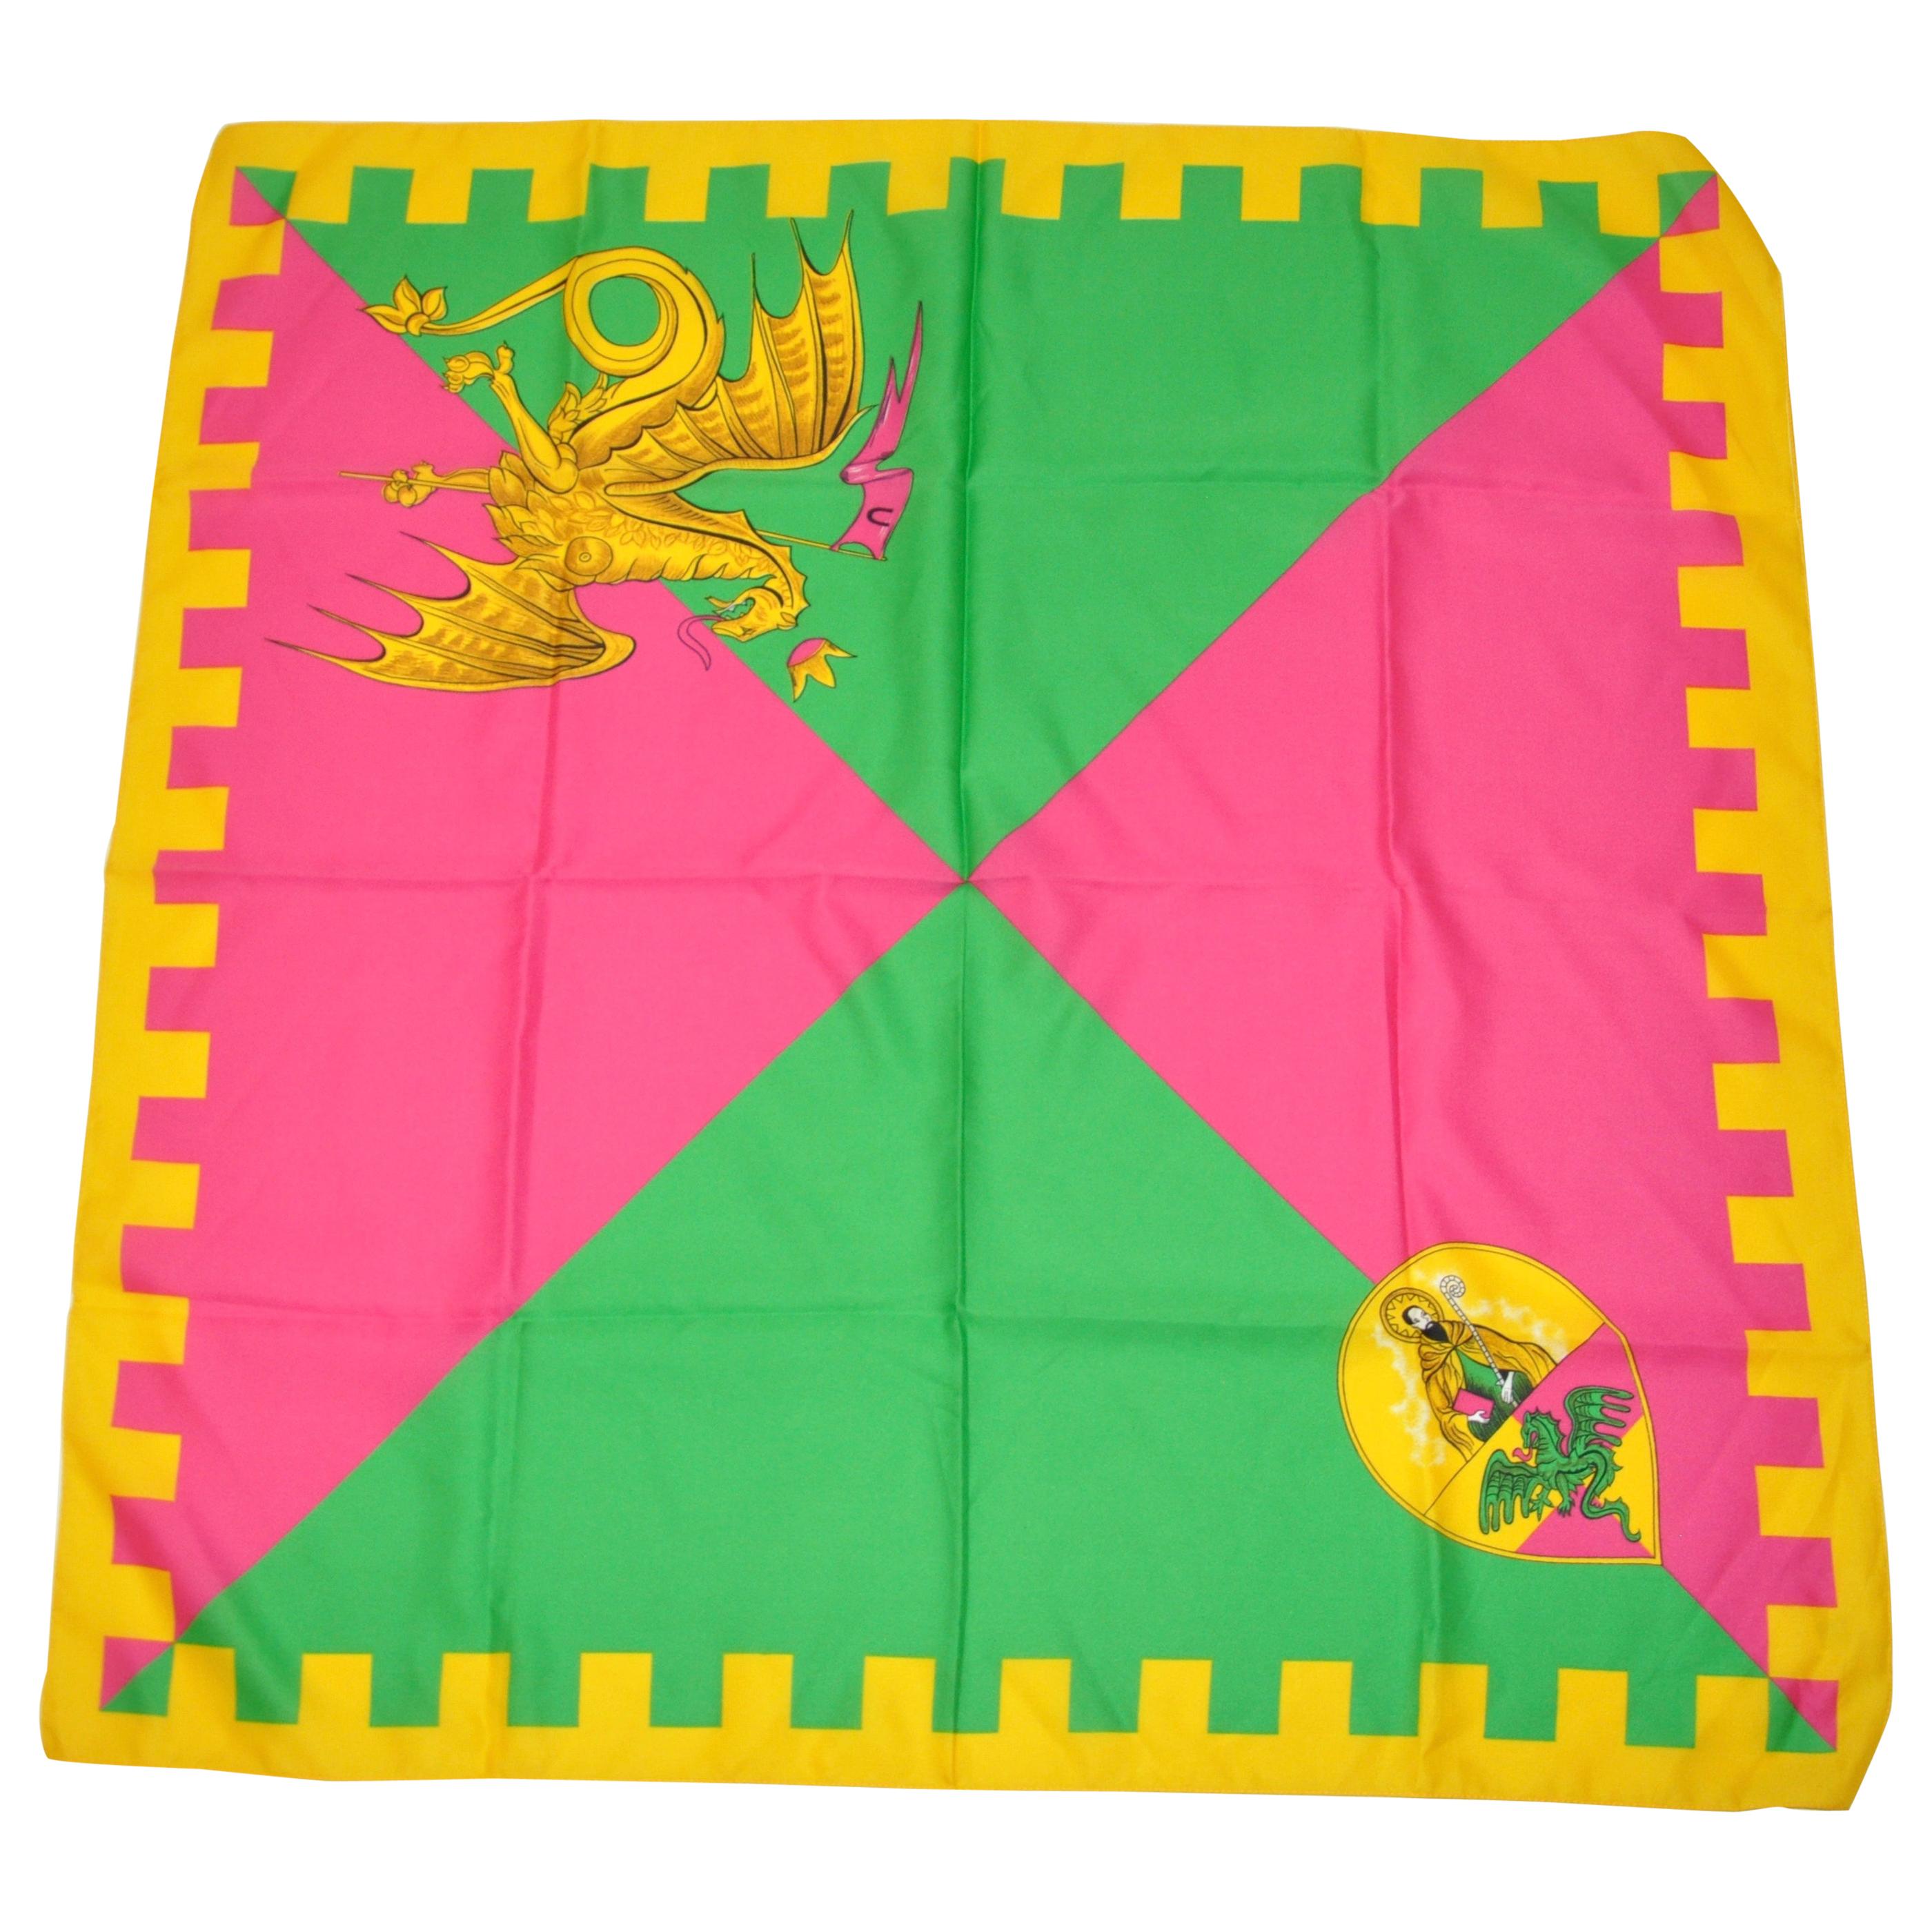 Écharpe « Kingdom Dragon » à bordure jaune, fuchsia et verte